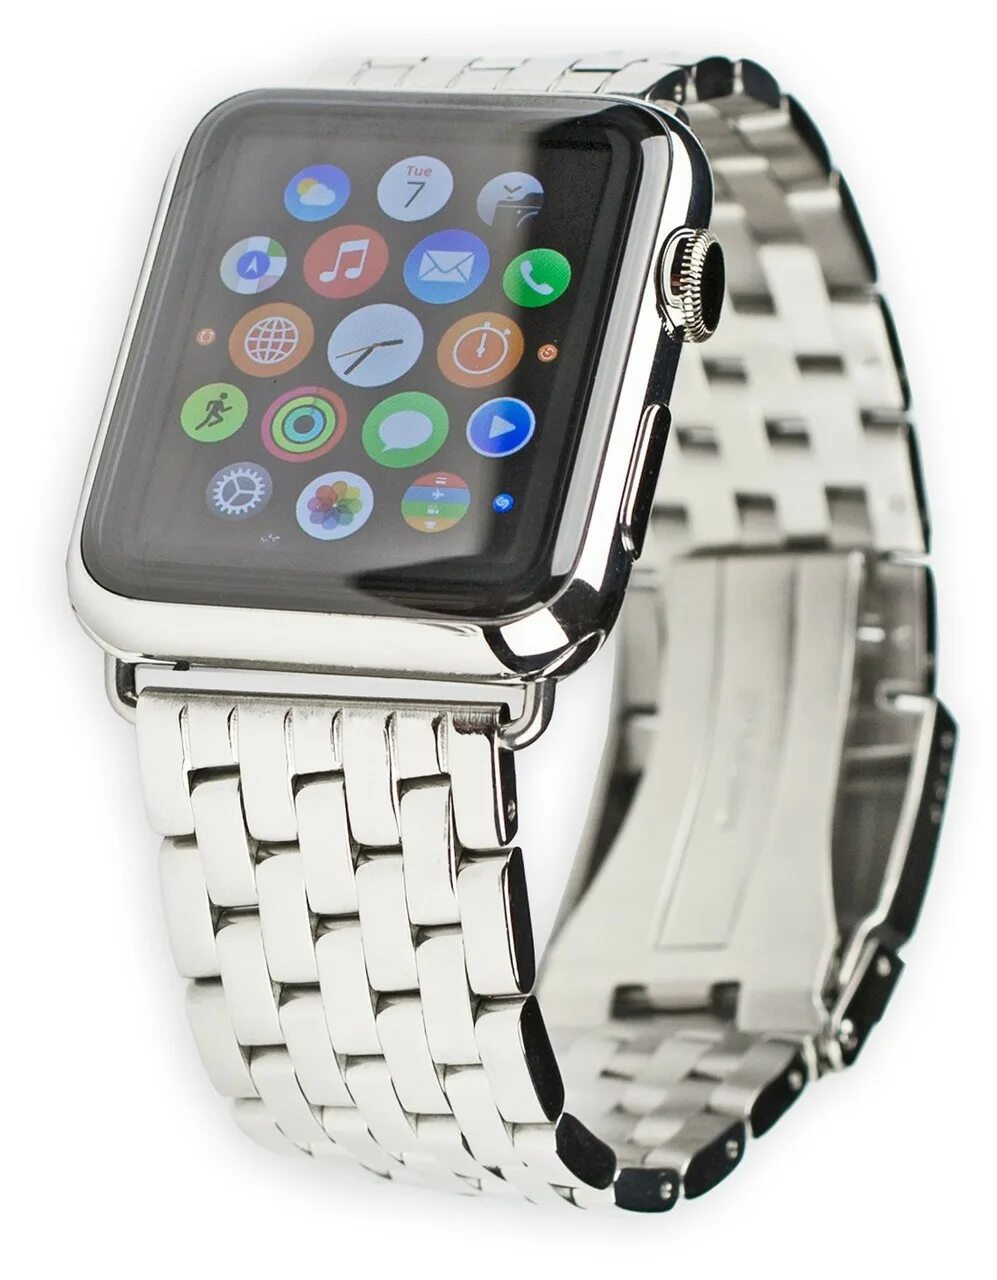 Вотч 8 45 мм. Apple watch 316l Stainless Steel. Apple watch 44mm. Эппл вотч 45 мм. Часы Apple watch 8 45mm.